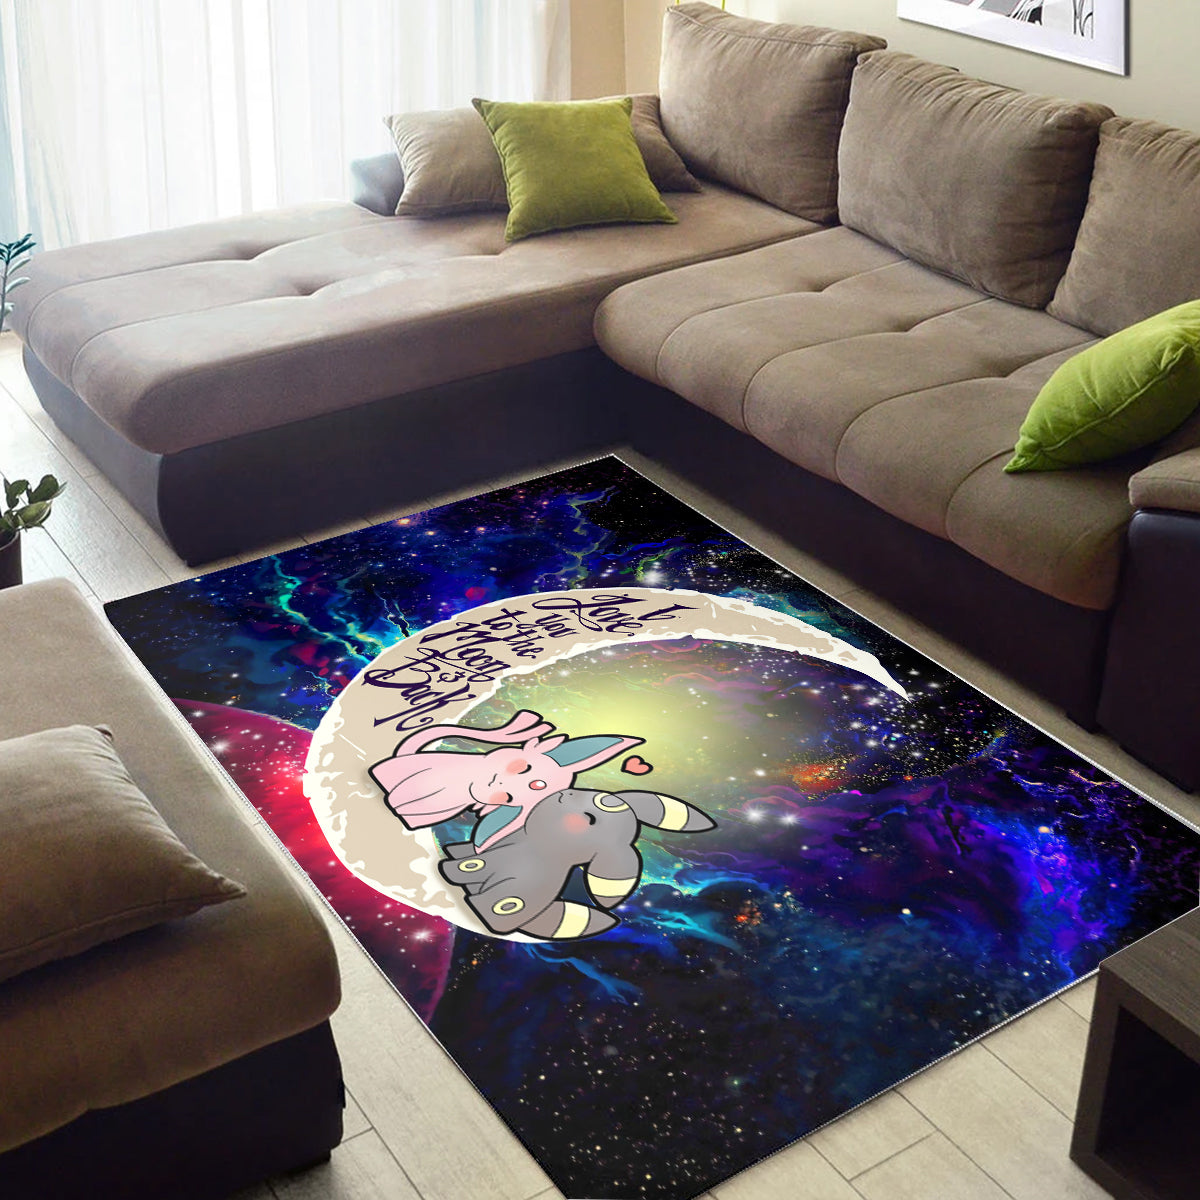 Pokemon Espeon Umbreon Love You To The Moon Galaxy Carpet Rug Home Room Decor